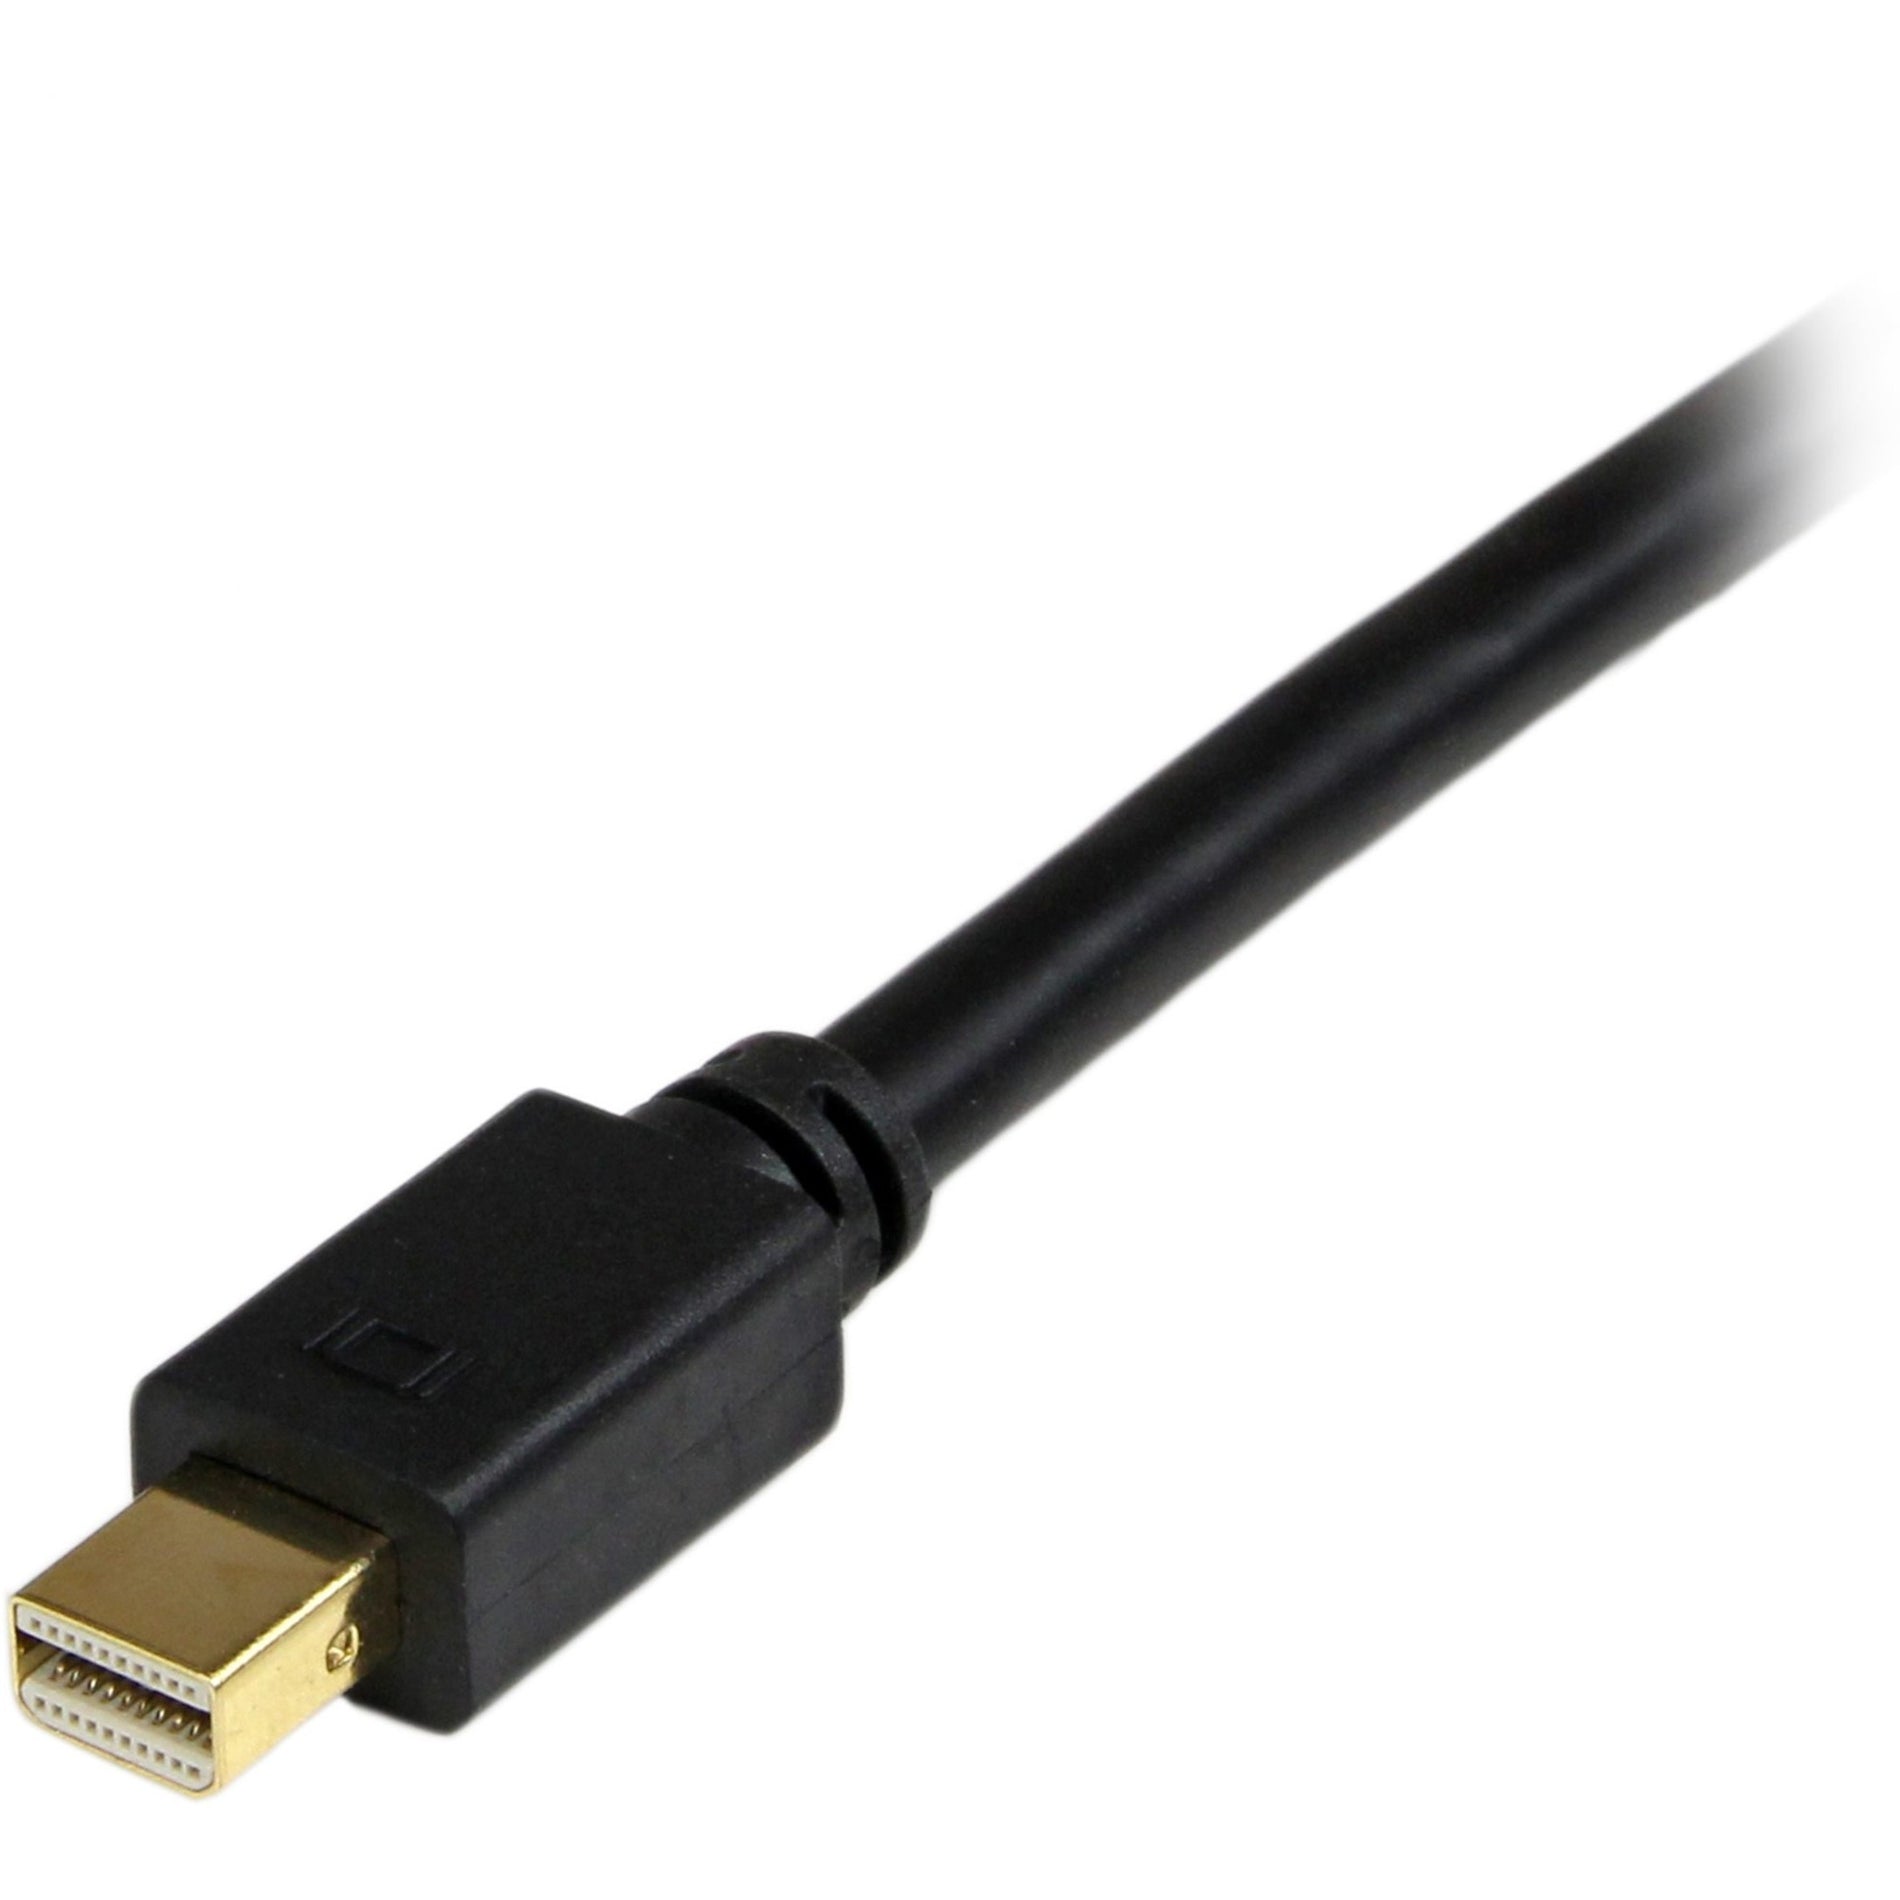 StarTech.com MDP2DVIMM3B Mini DisplayPort to DVI Adapter Converter Cable - Black, 3 ft, 1920x1200